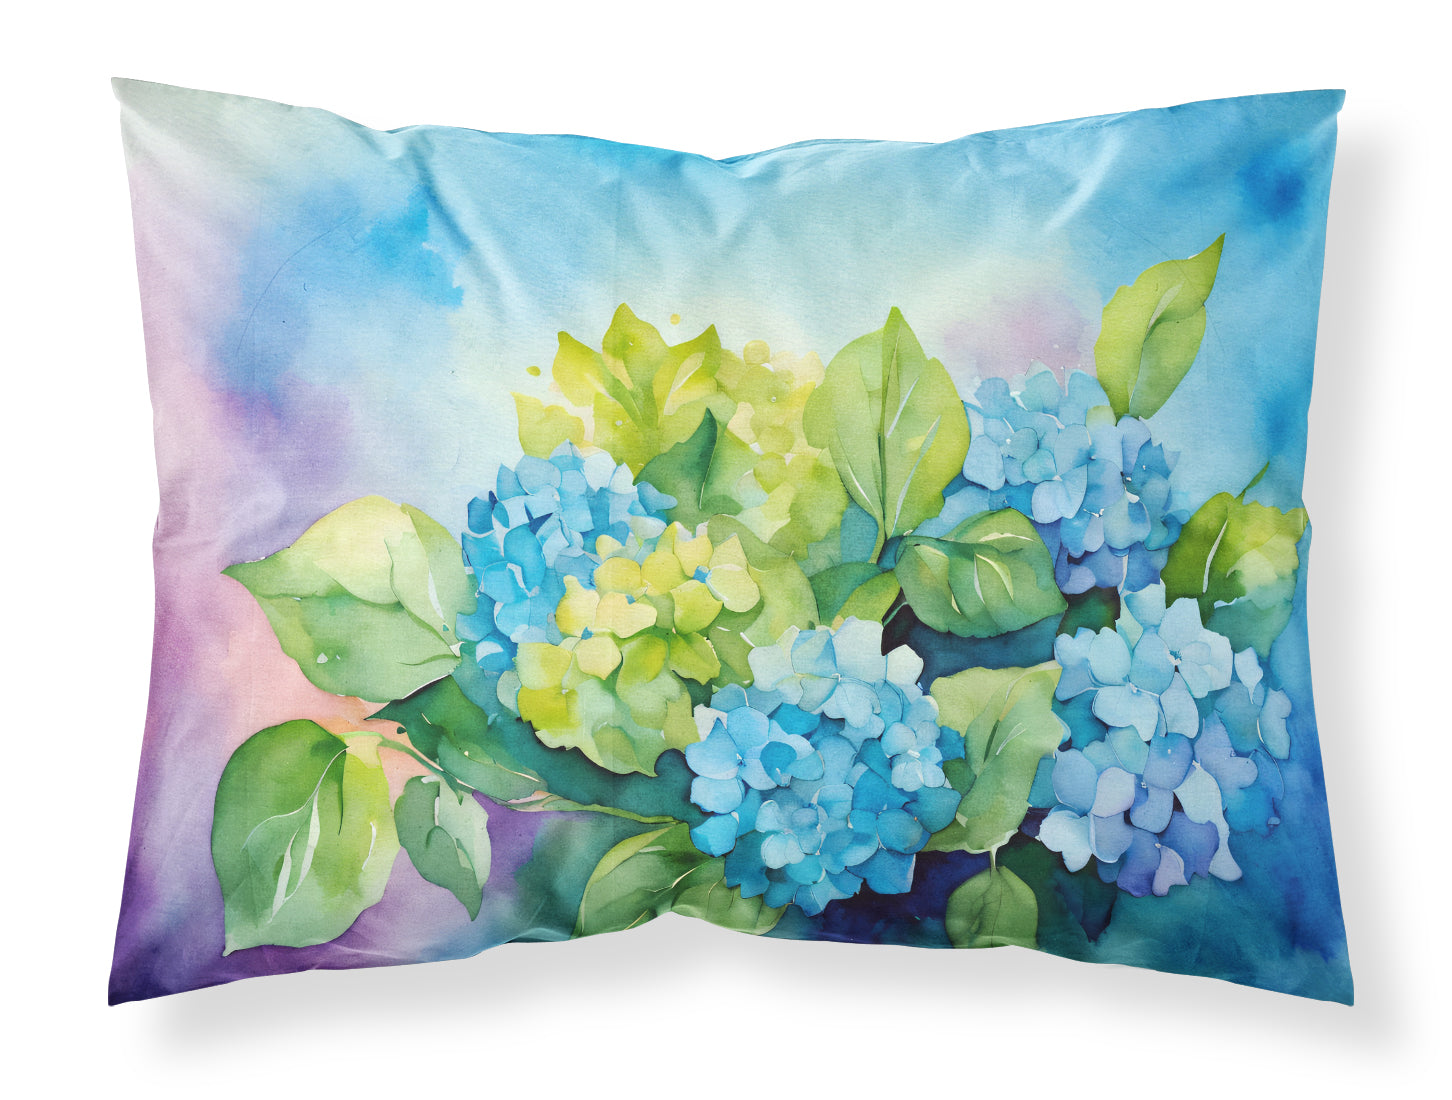 Buy this Hydrangeas in Watercolor Fabric Standard Pillowcase